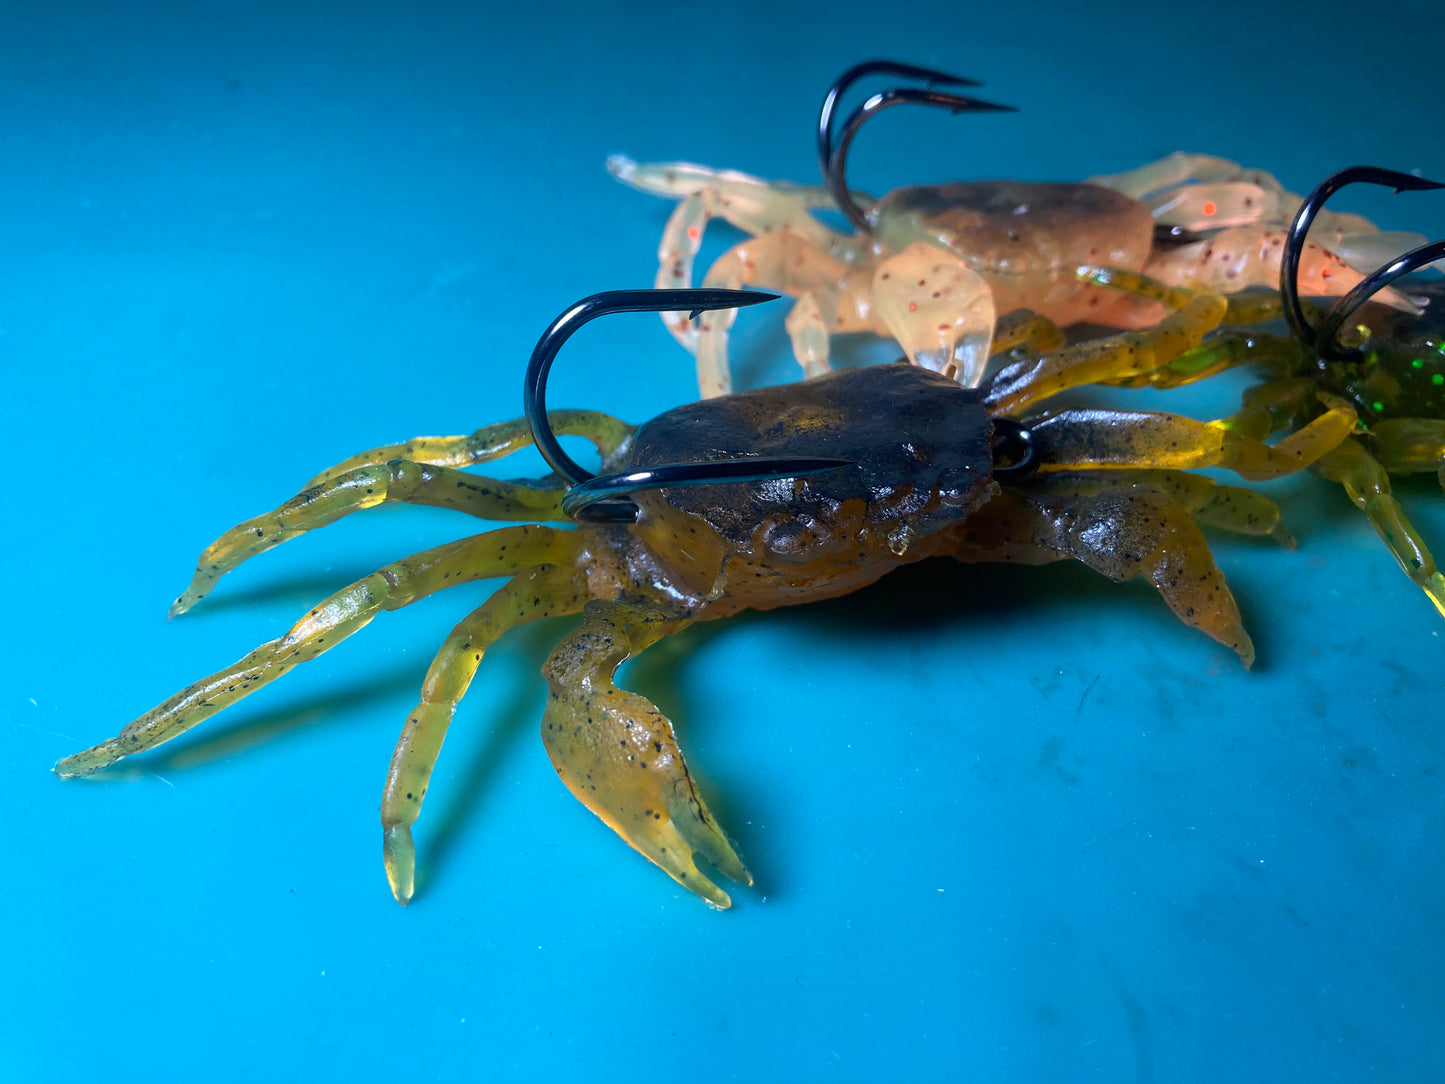 3  PACK  Crawlin' Crab 3 inch Crab Walking Legs Soft Fishing Lure Ready to Fish